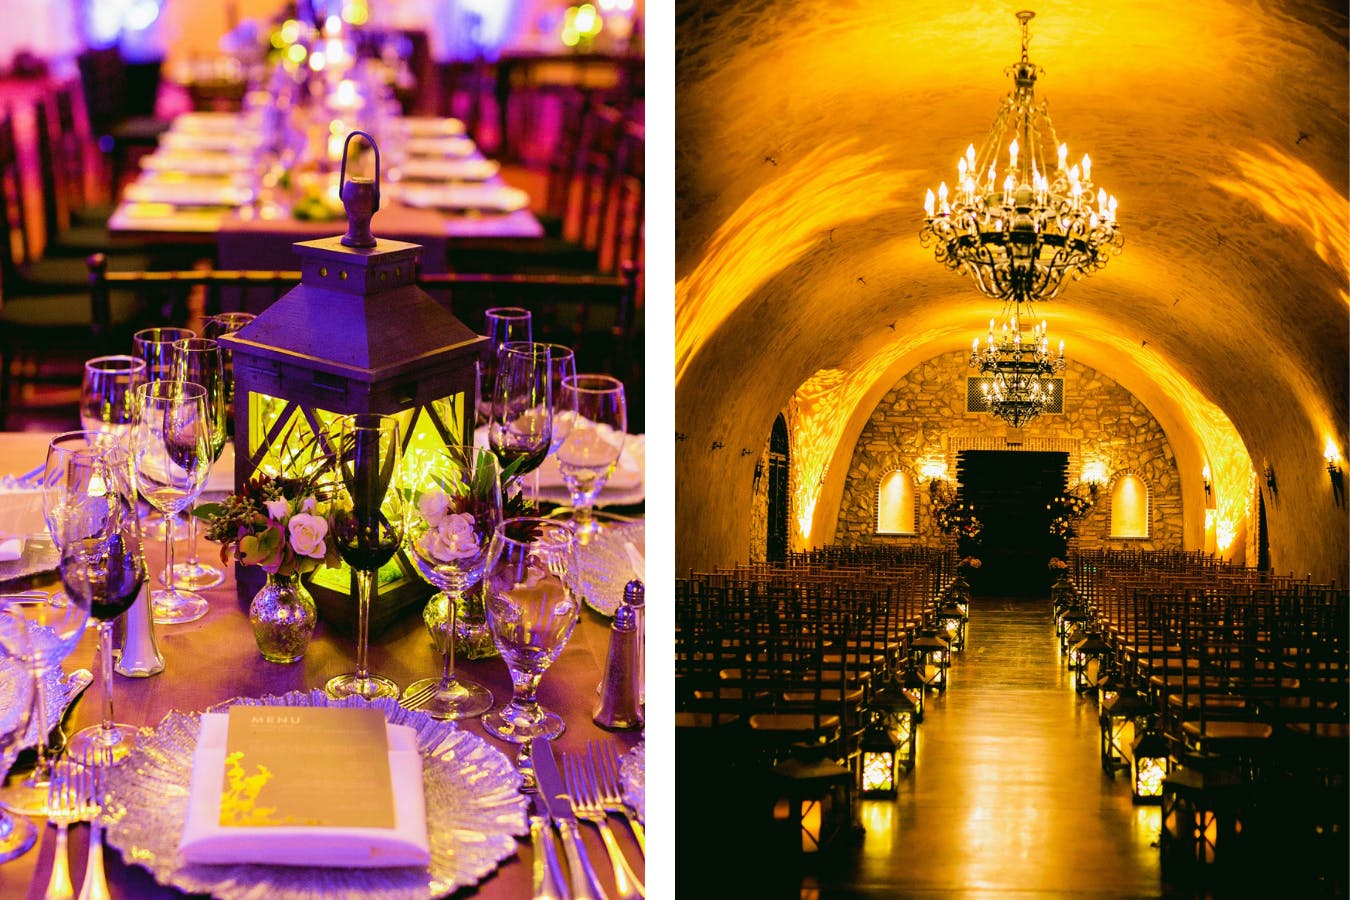 Lantern Wedding Centerpiece and Wedding Aisle Décor | PartySlate